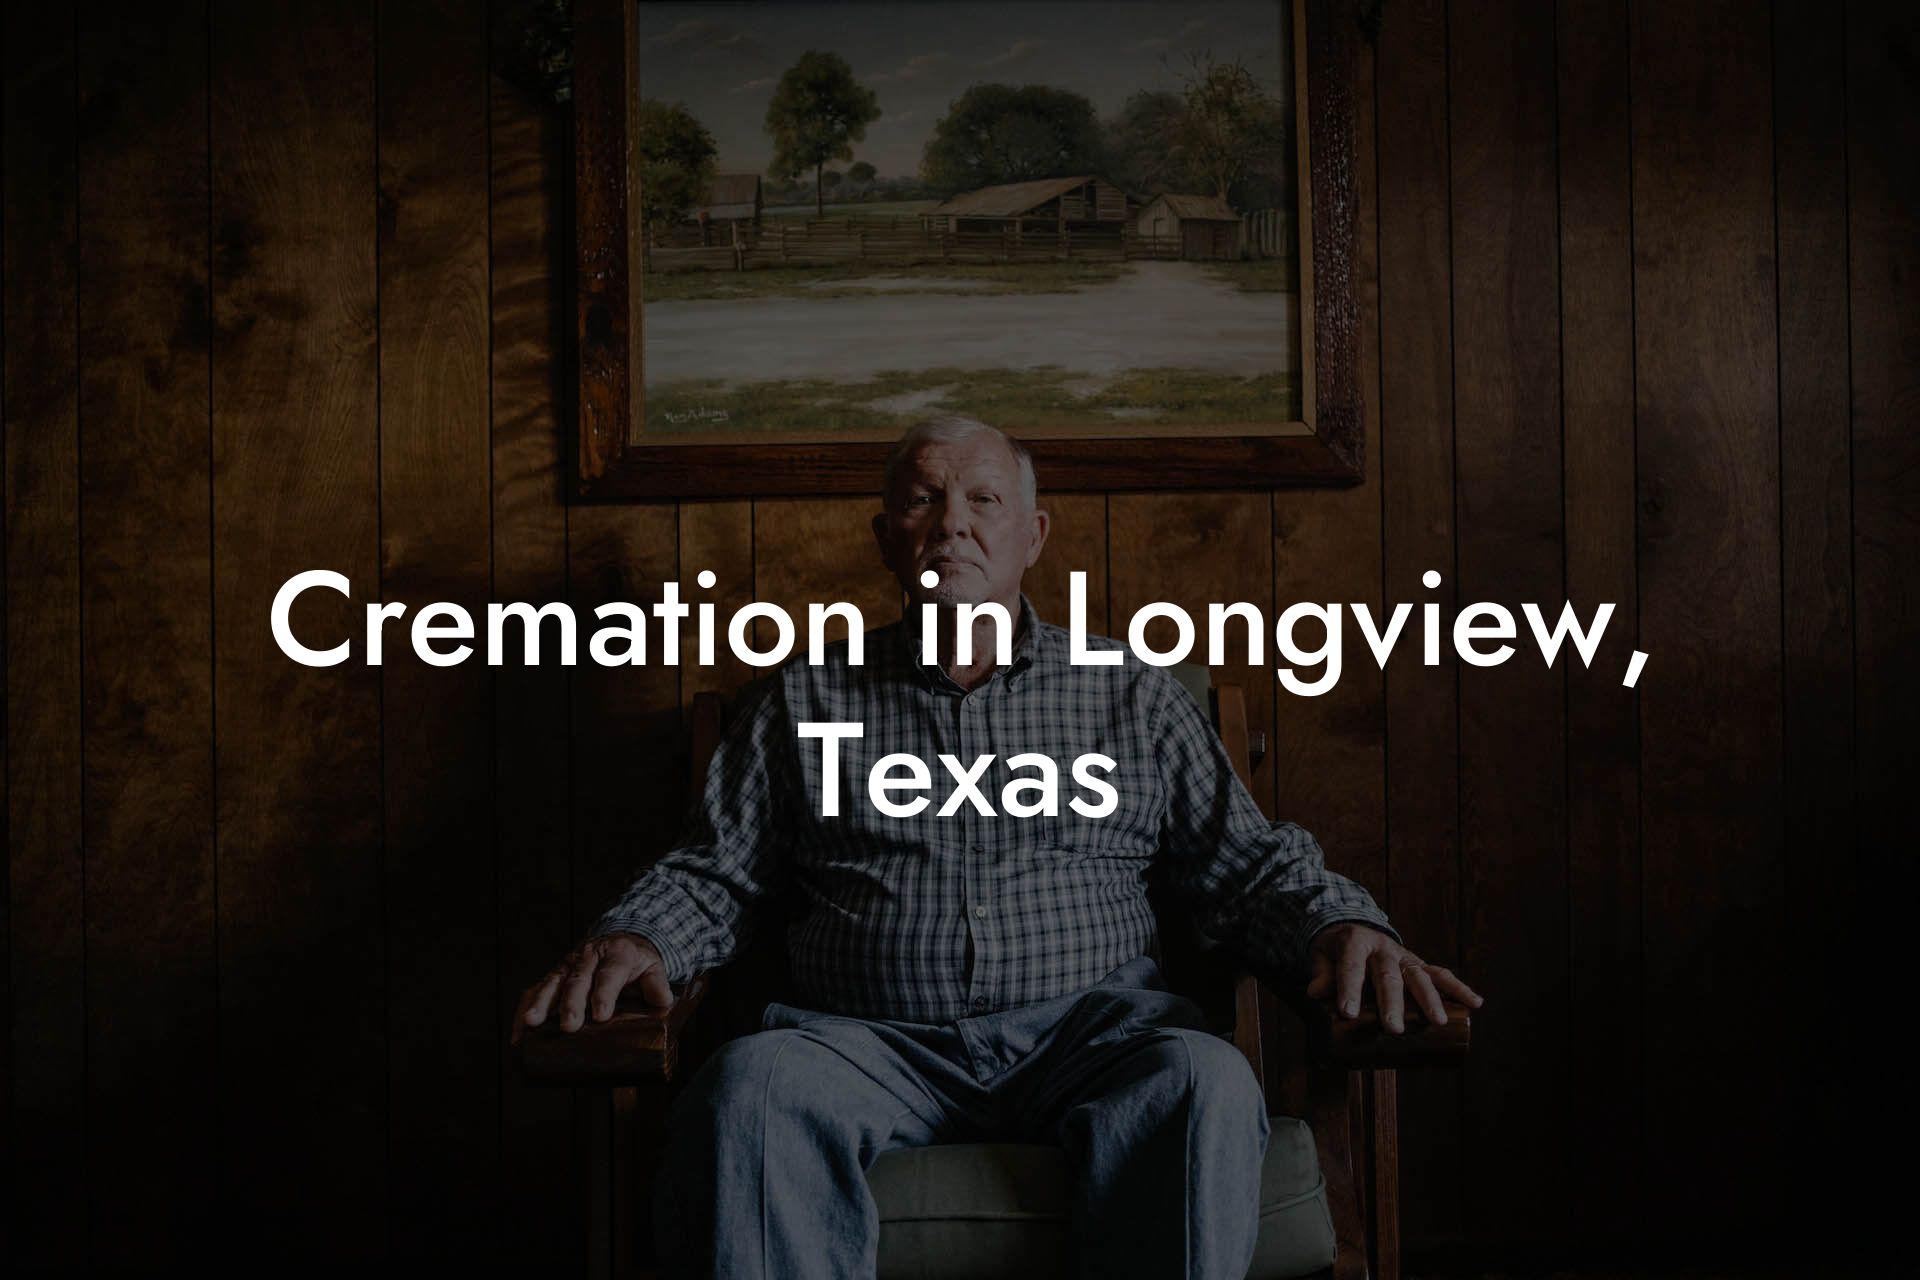 Cremation in Longview, Texas